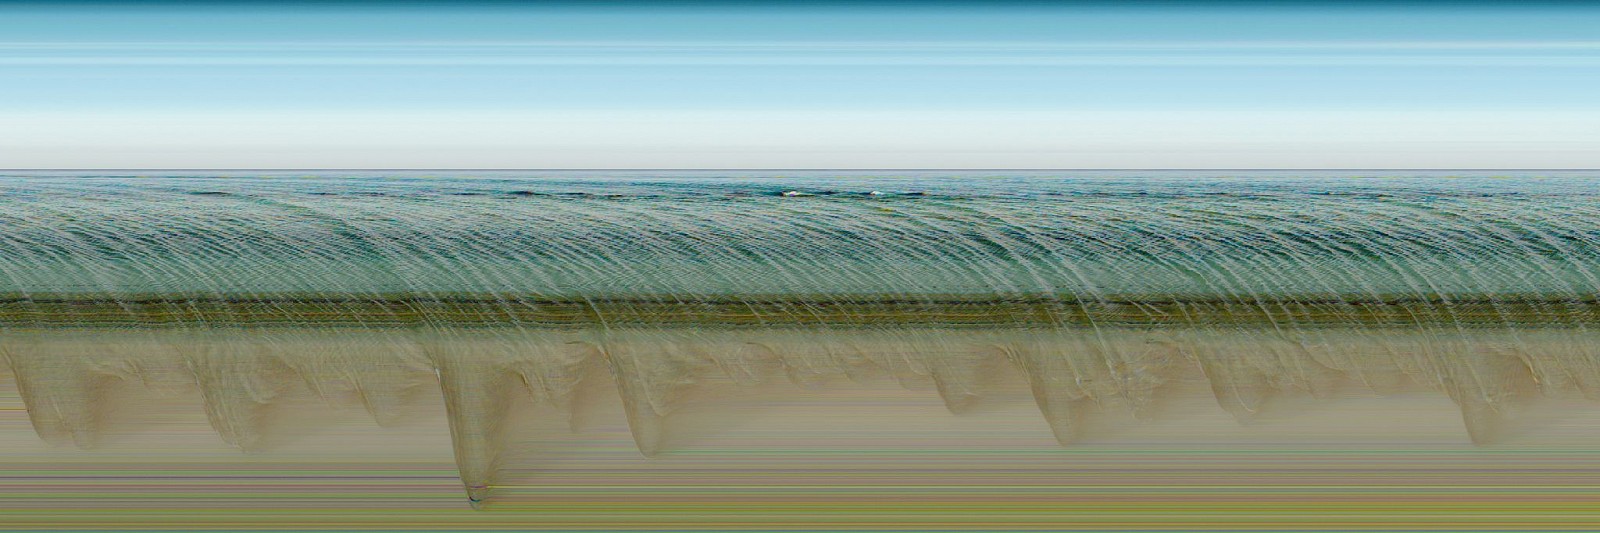 Jay Mark Johnson, COZUMEL WAVES #23, 2009 Cozumel MX
archival pigment on paper, mounted on aluminum, 40 x 120 in. (101.6 x 304.8 cm)